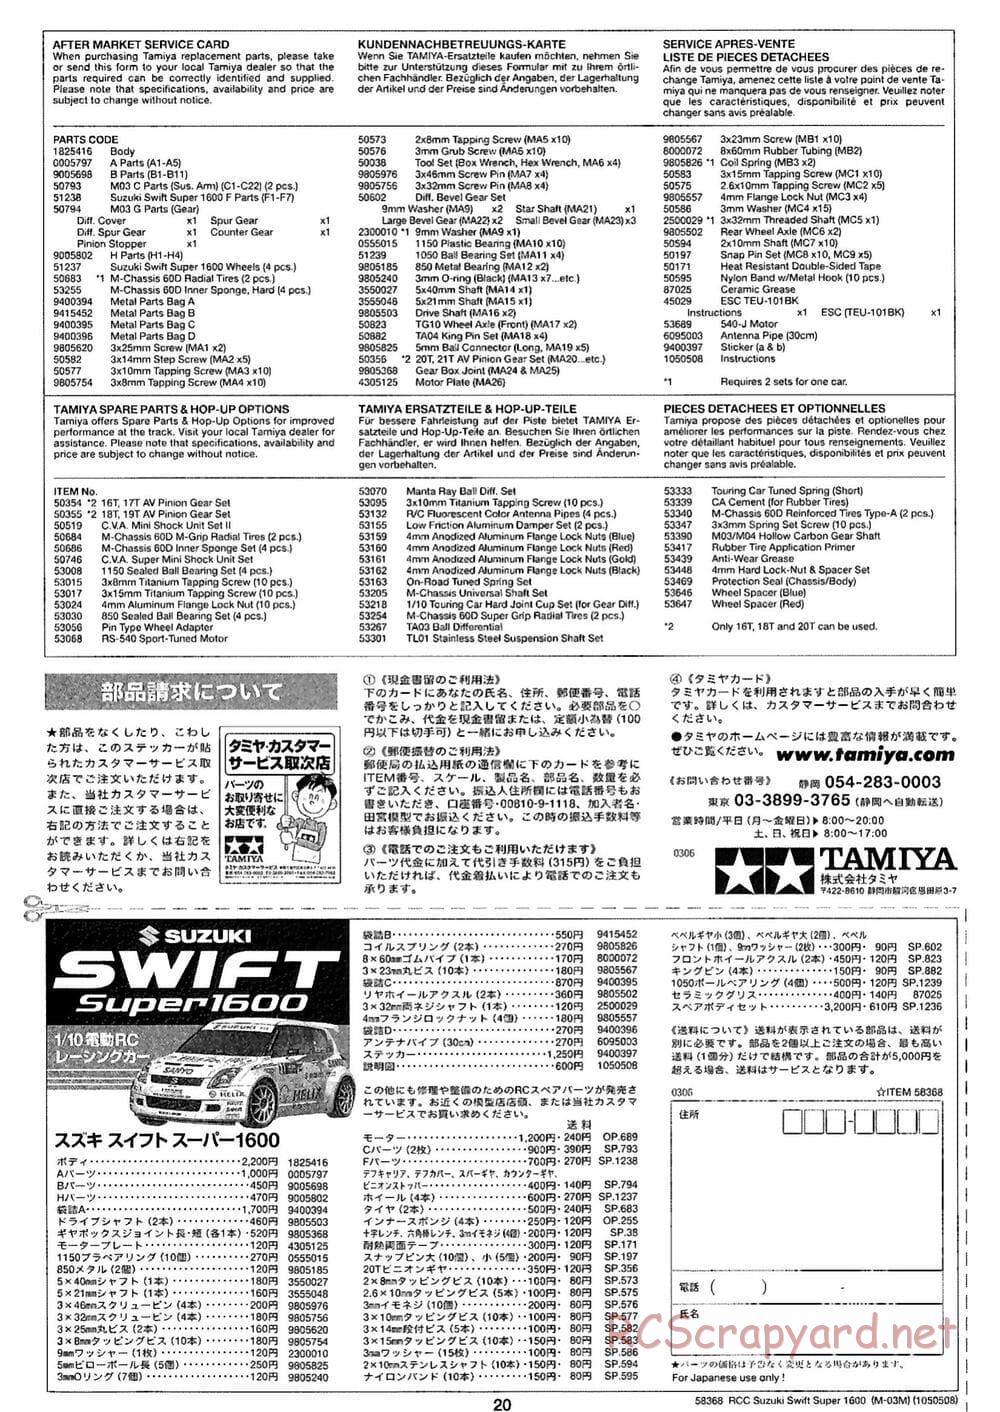 Tamiya - Suzuki Swift Super 1600 - M03M Chassis - Manual - Page 20